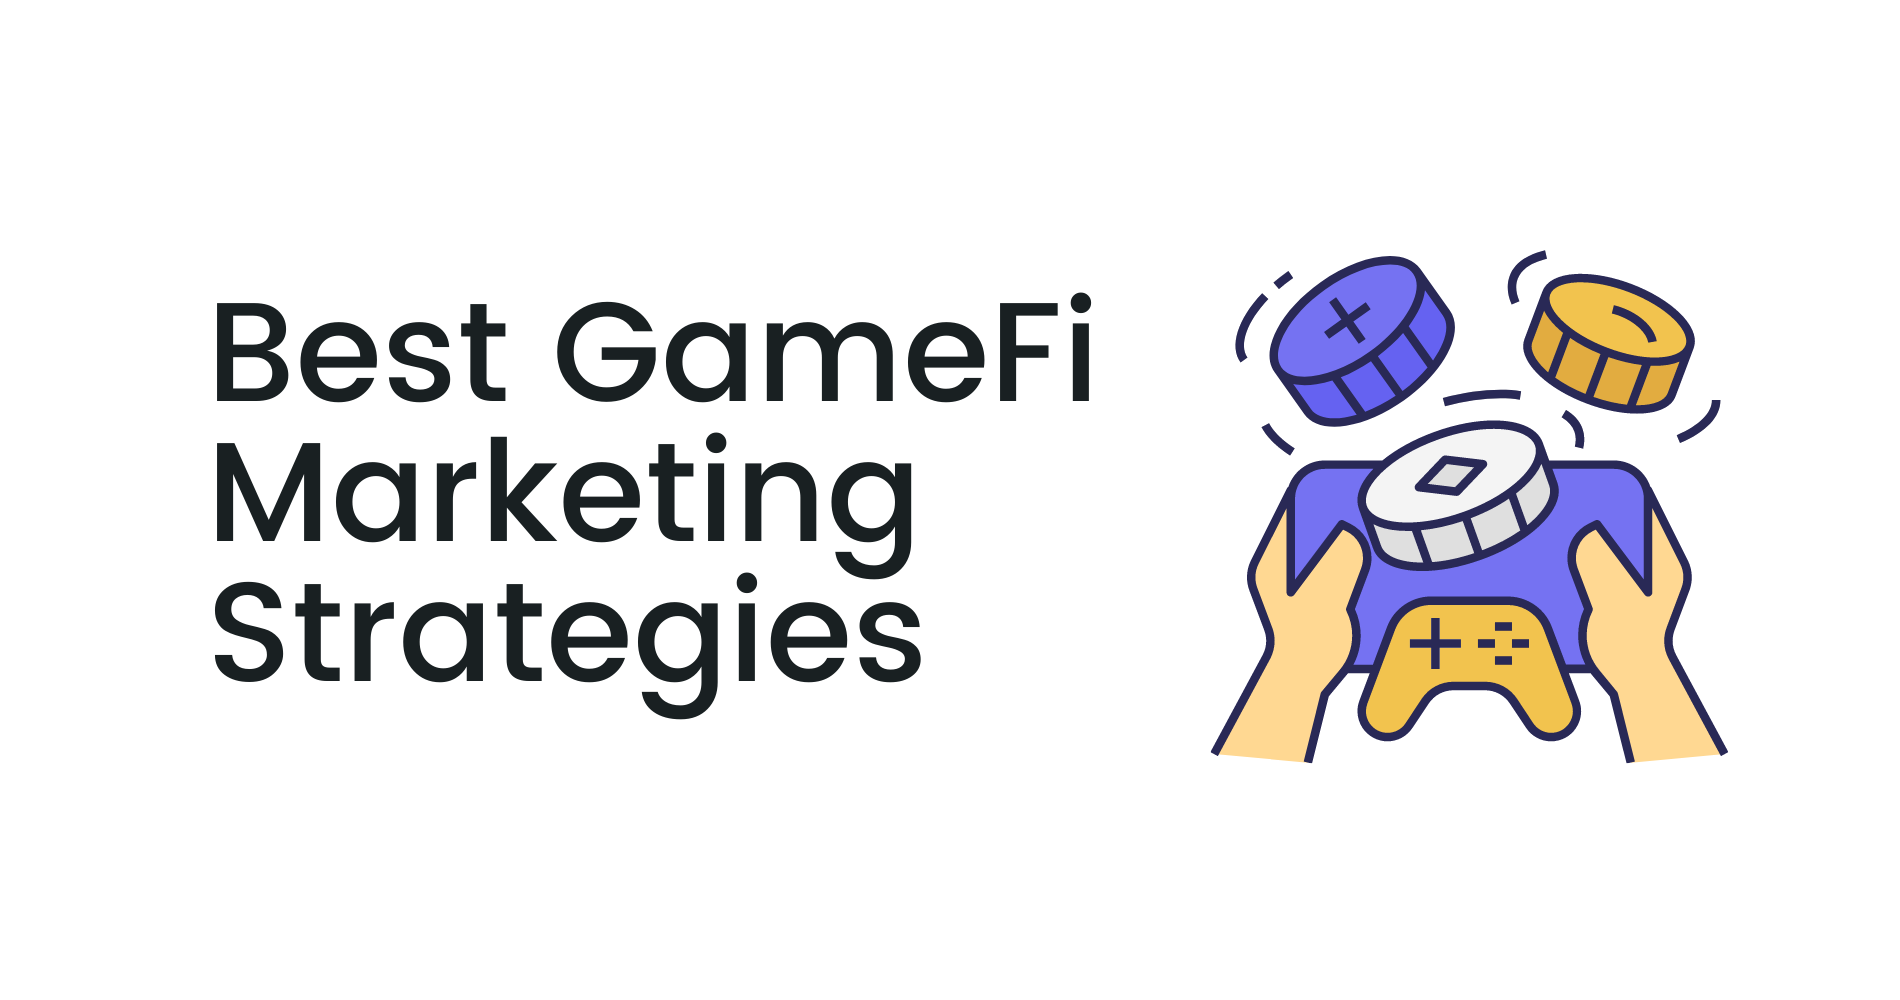 GameFi Marketing Strategies